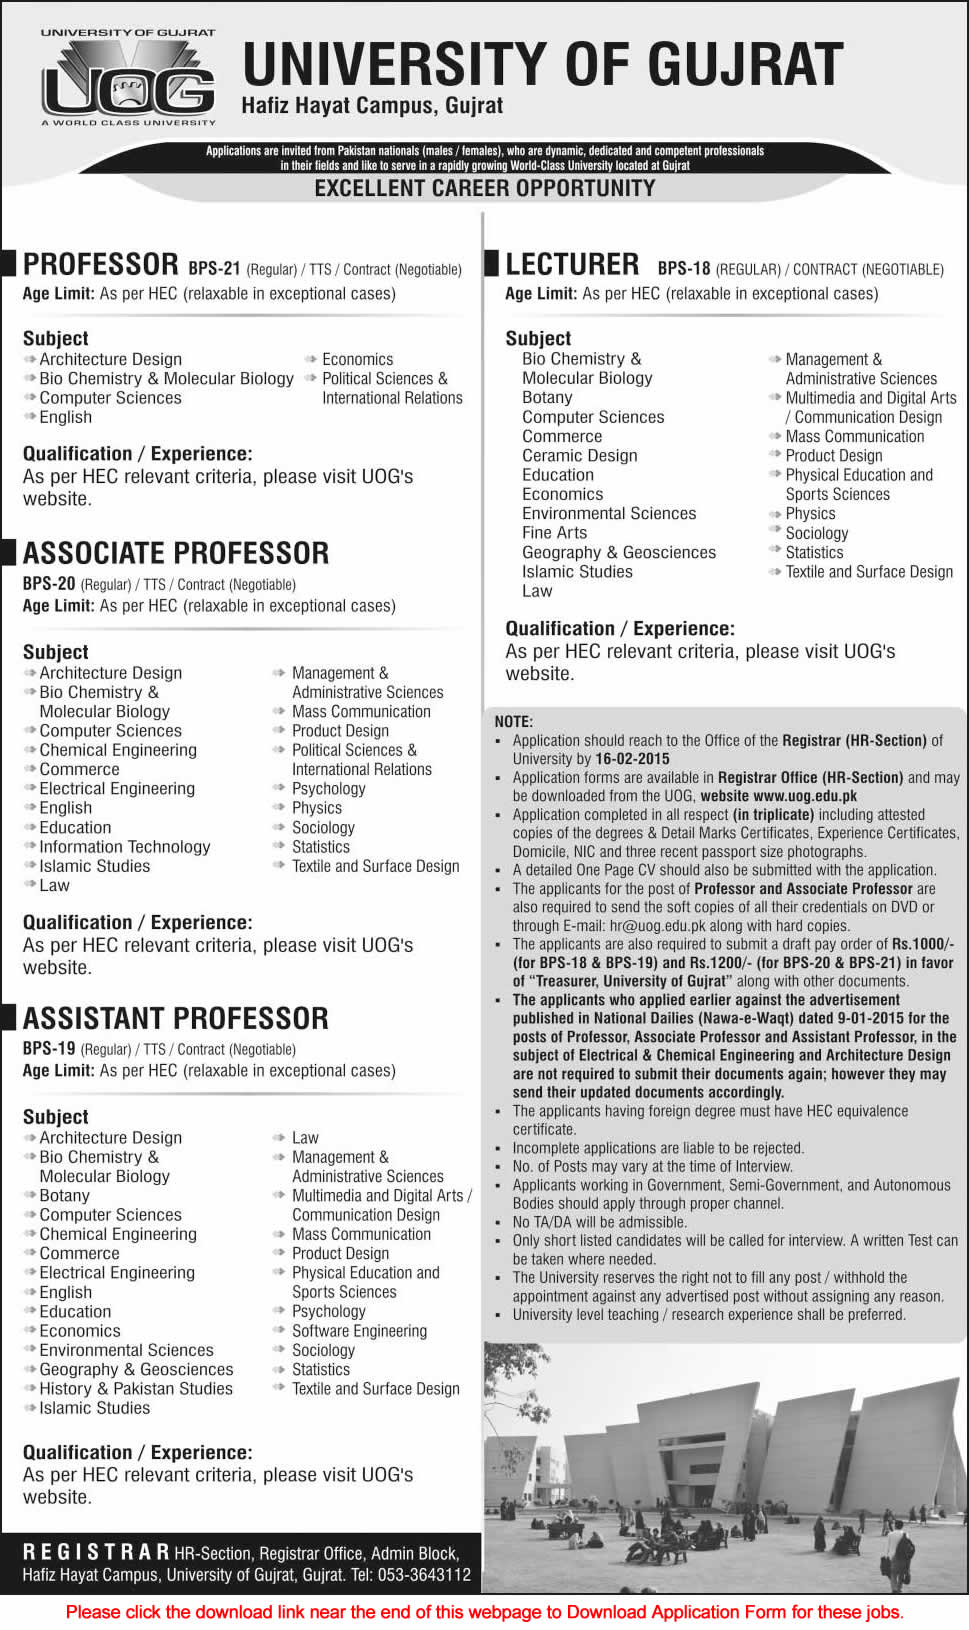 University of Gujrat Jobs 2015 Application Form Download Teaching Faculty at Hafiz Hayat Campus